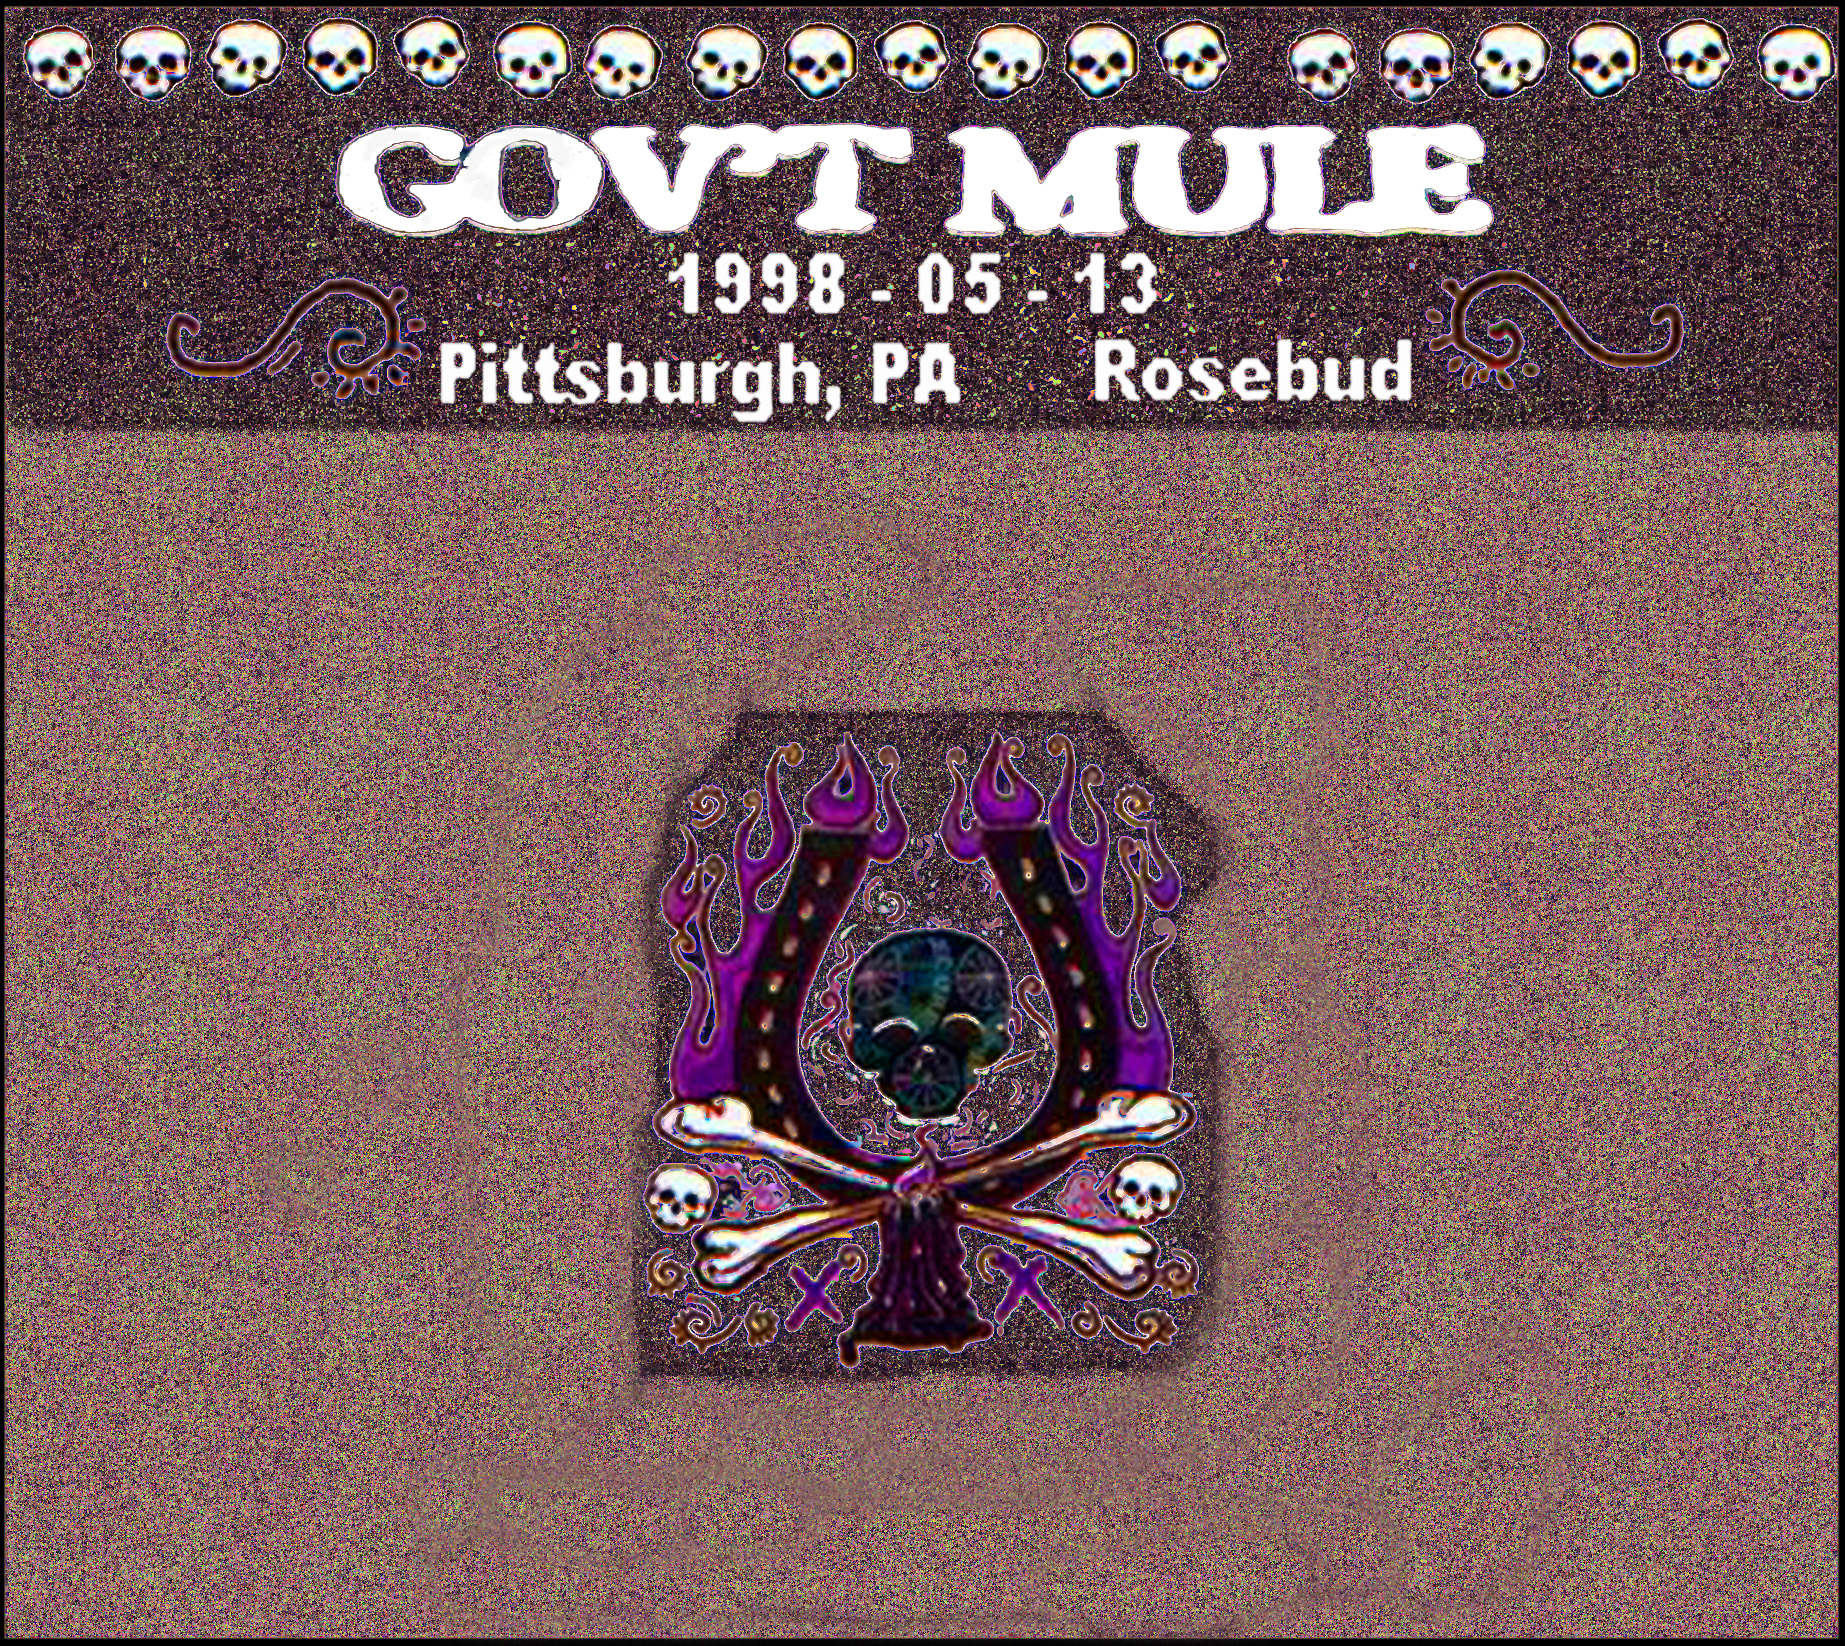 GovernmentMule1998-05-13RosebudPittsburghPA (1).jpg